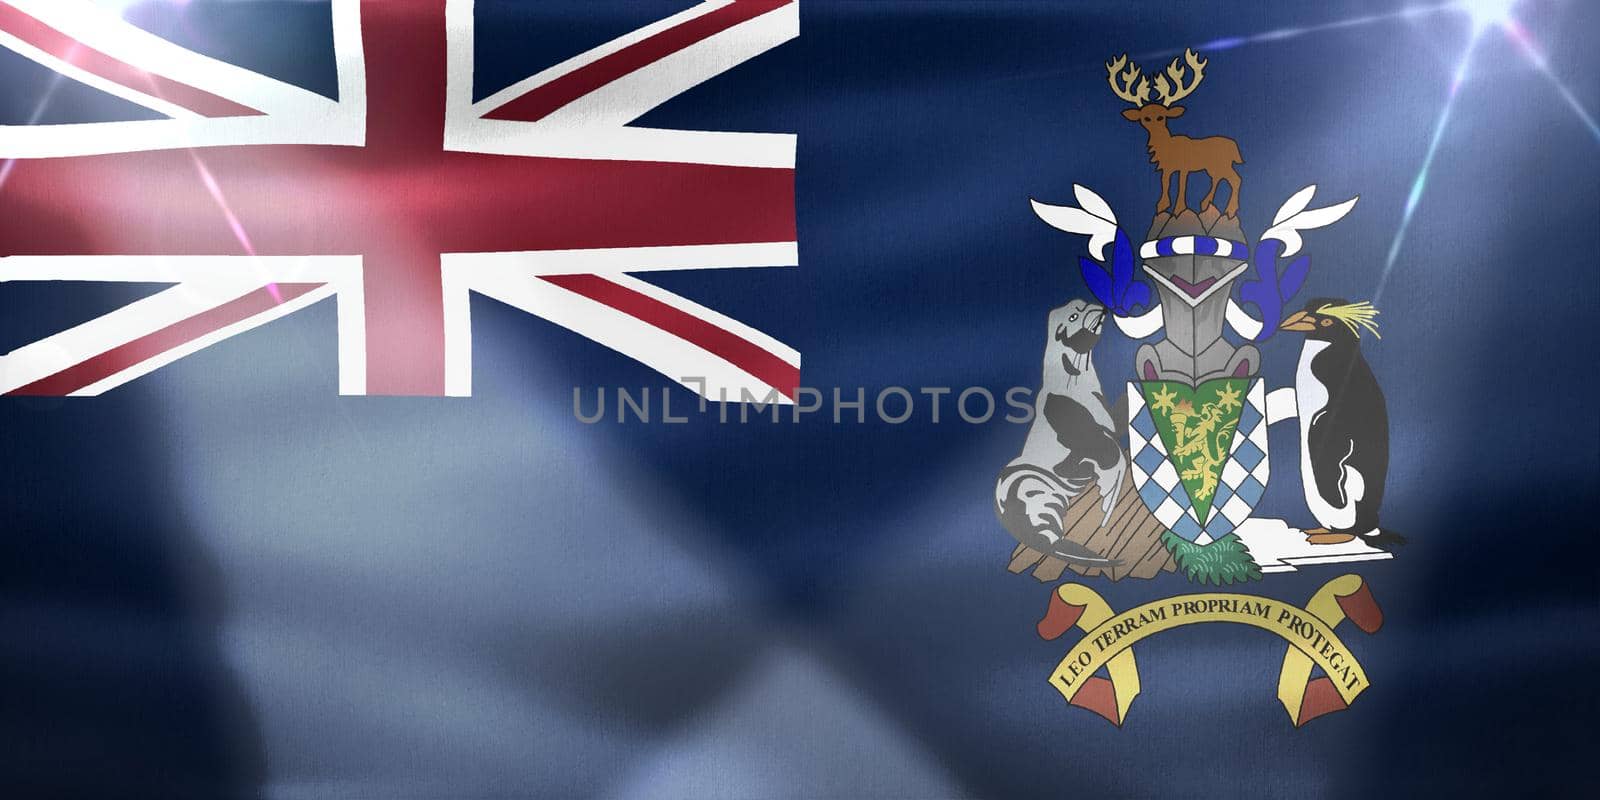 South Georgia and the South Sandwich Islands flag - realistic waving fabric flag